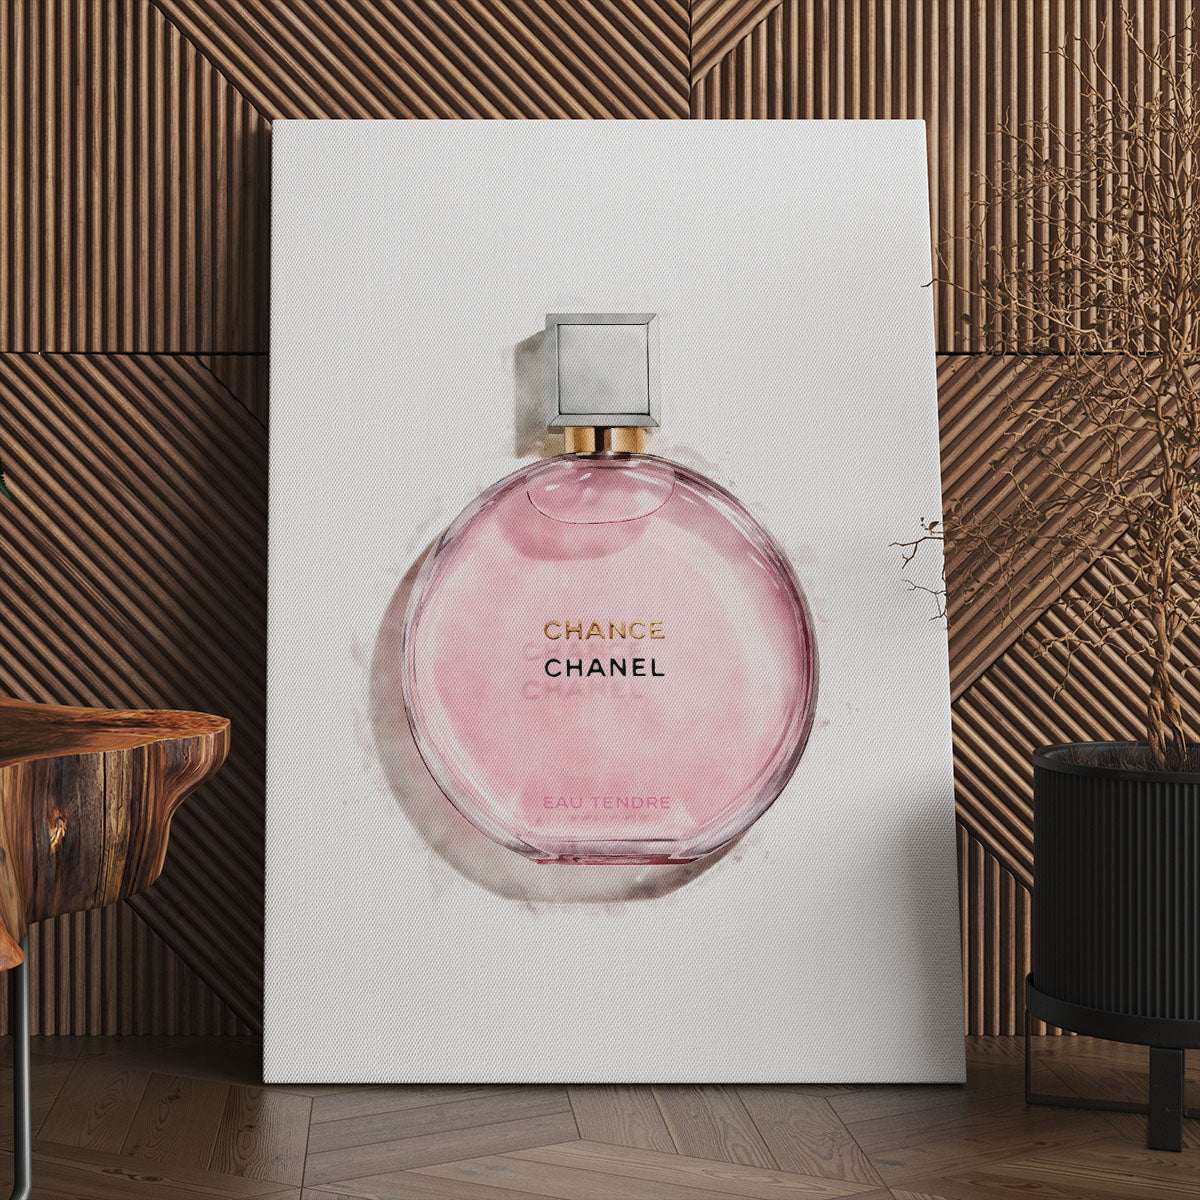 Framed Canvas Art (White Floating Frame) - Black and Pink Perfume Bottle by Amanda Greenwood ( Fashion > Hair & Beauty > Perfume Bottles art) - 26x26